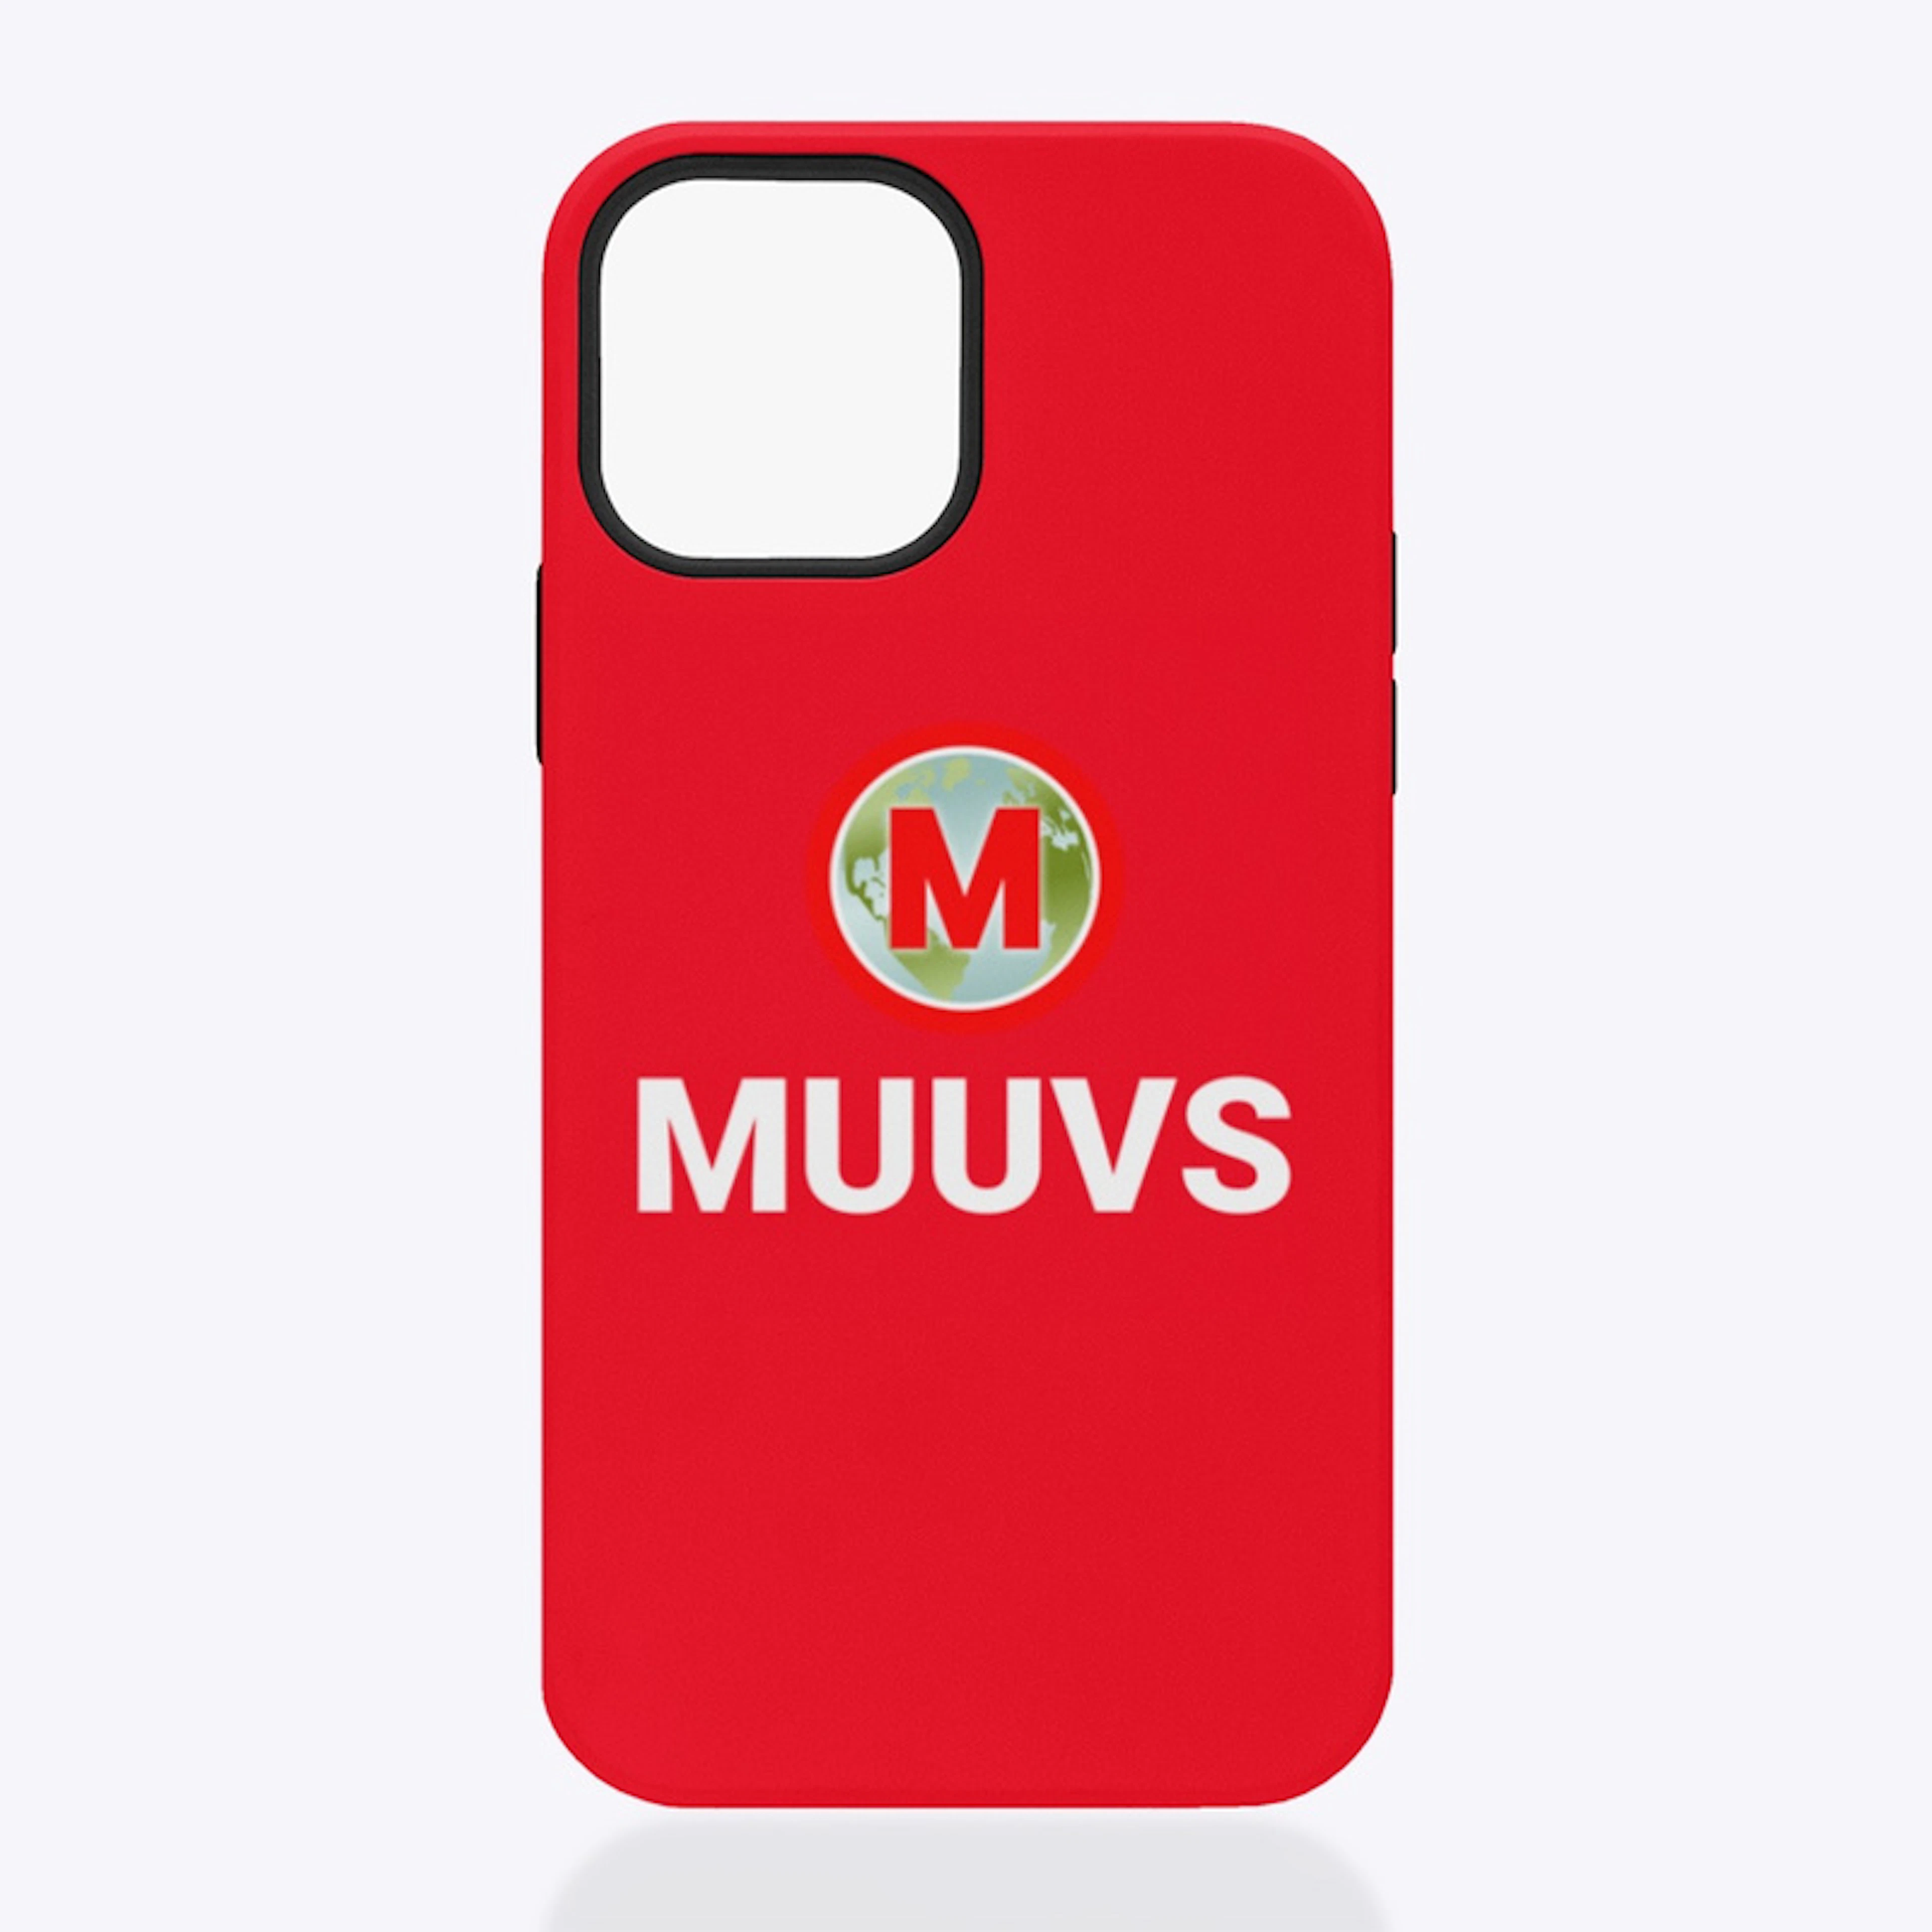 MUUVS iPhone Case